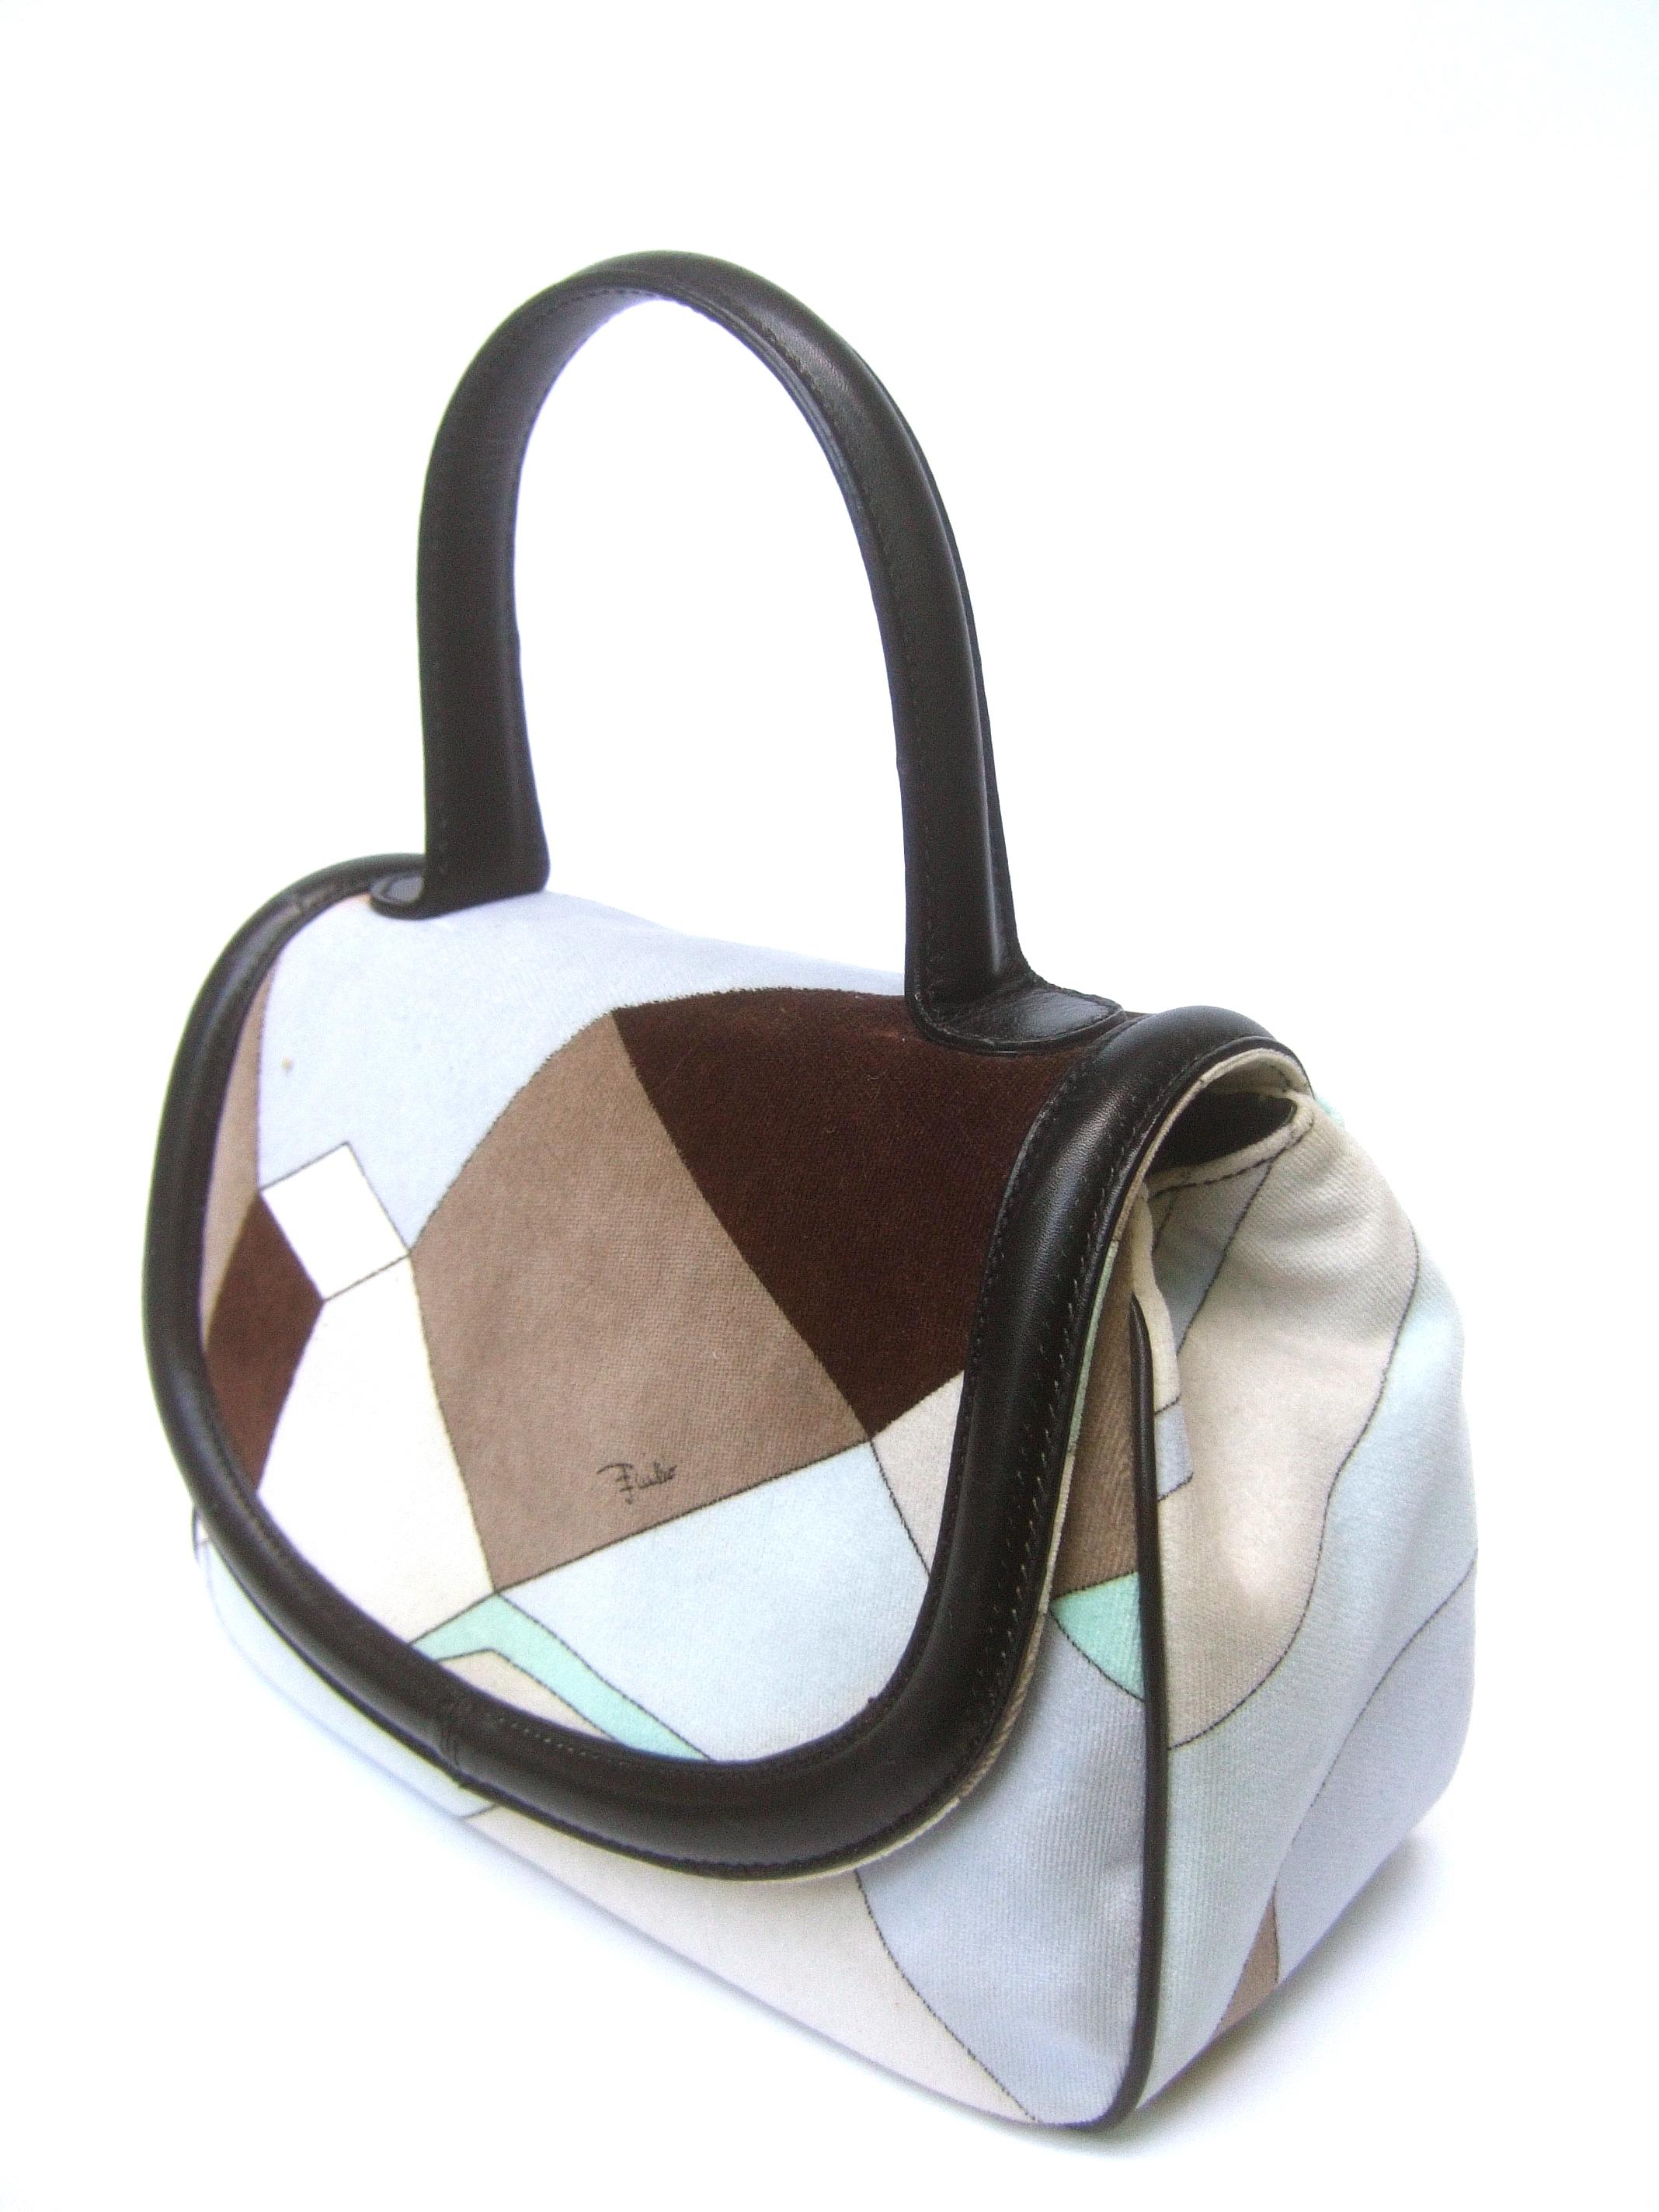 Emilio Pucci Mod Velvet Print Leather Trim Italian Handbag circa 21st c  For Sale 3